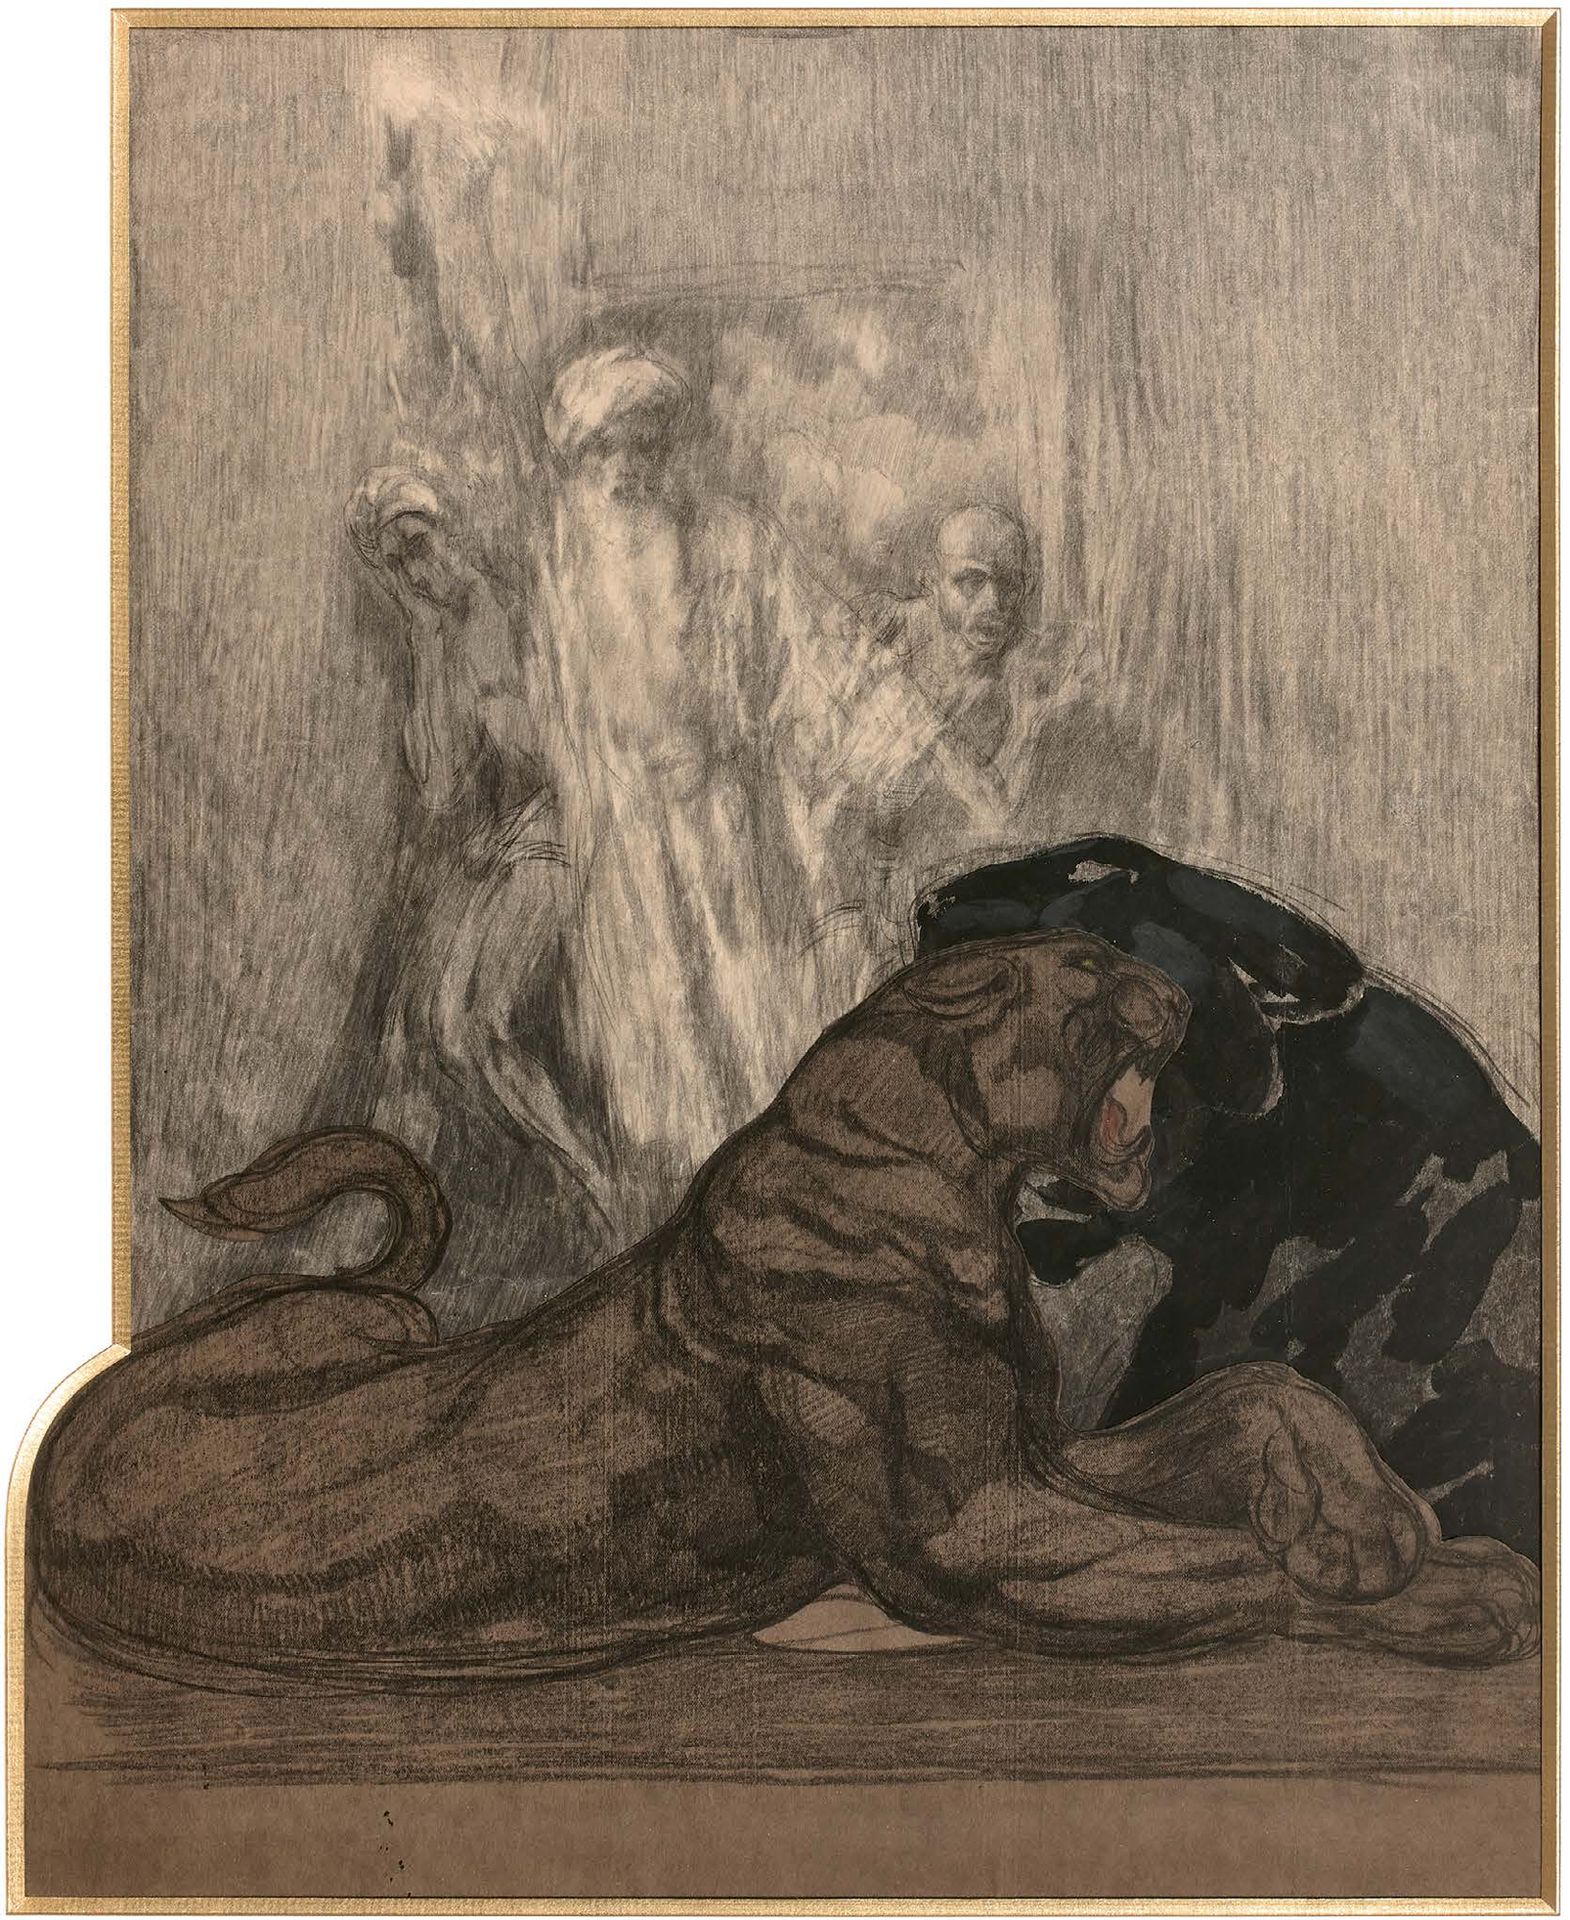 Paul JOUVE (1878-1973) 
两只豹子
混合媒介，黑色铅笔和树桩画，水粉画和拼贴画。
60,5 x 45,5 cm
出处：
- 巴黎Hôtel&hellip;